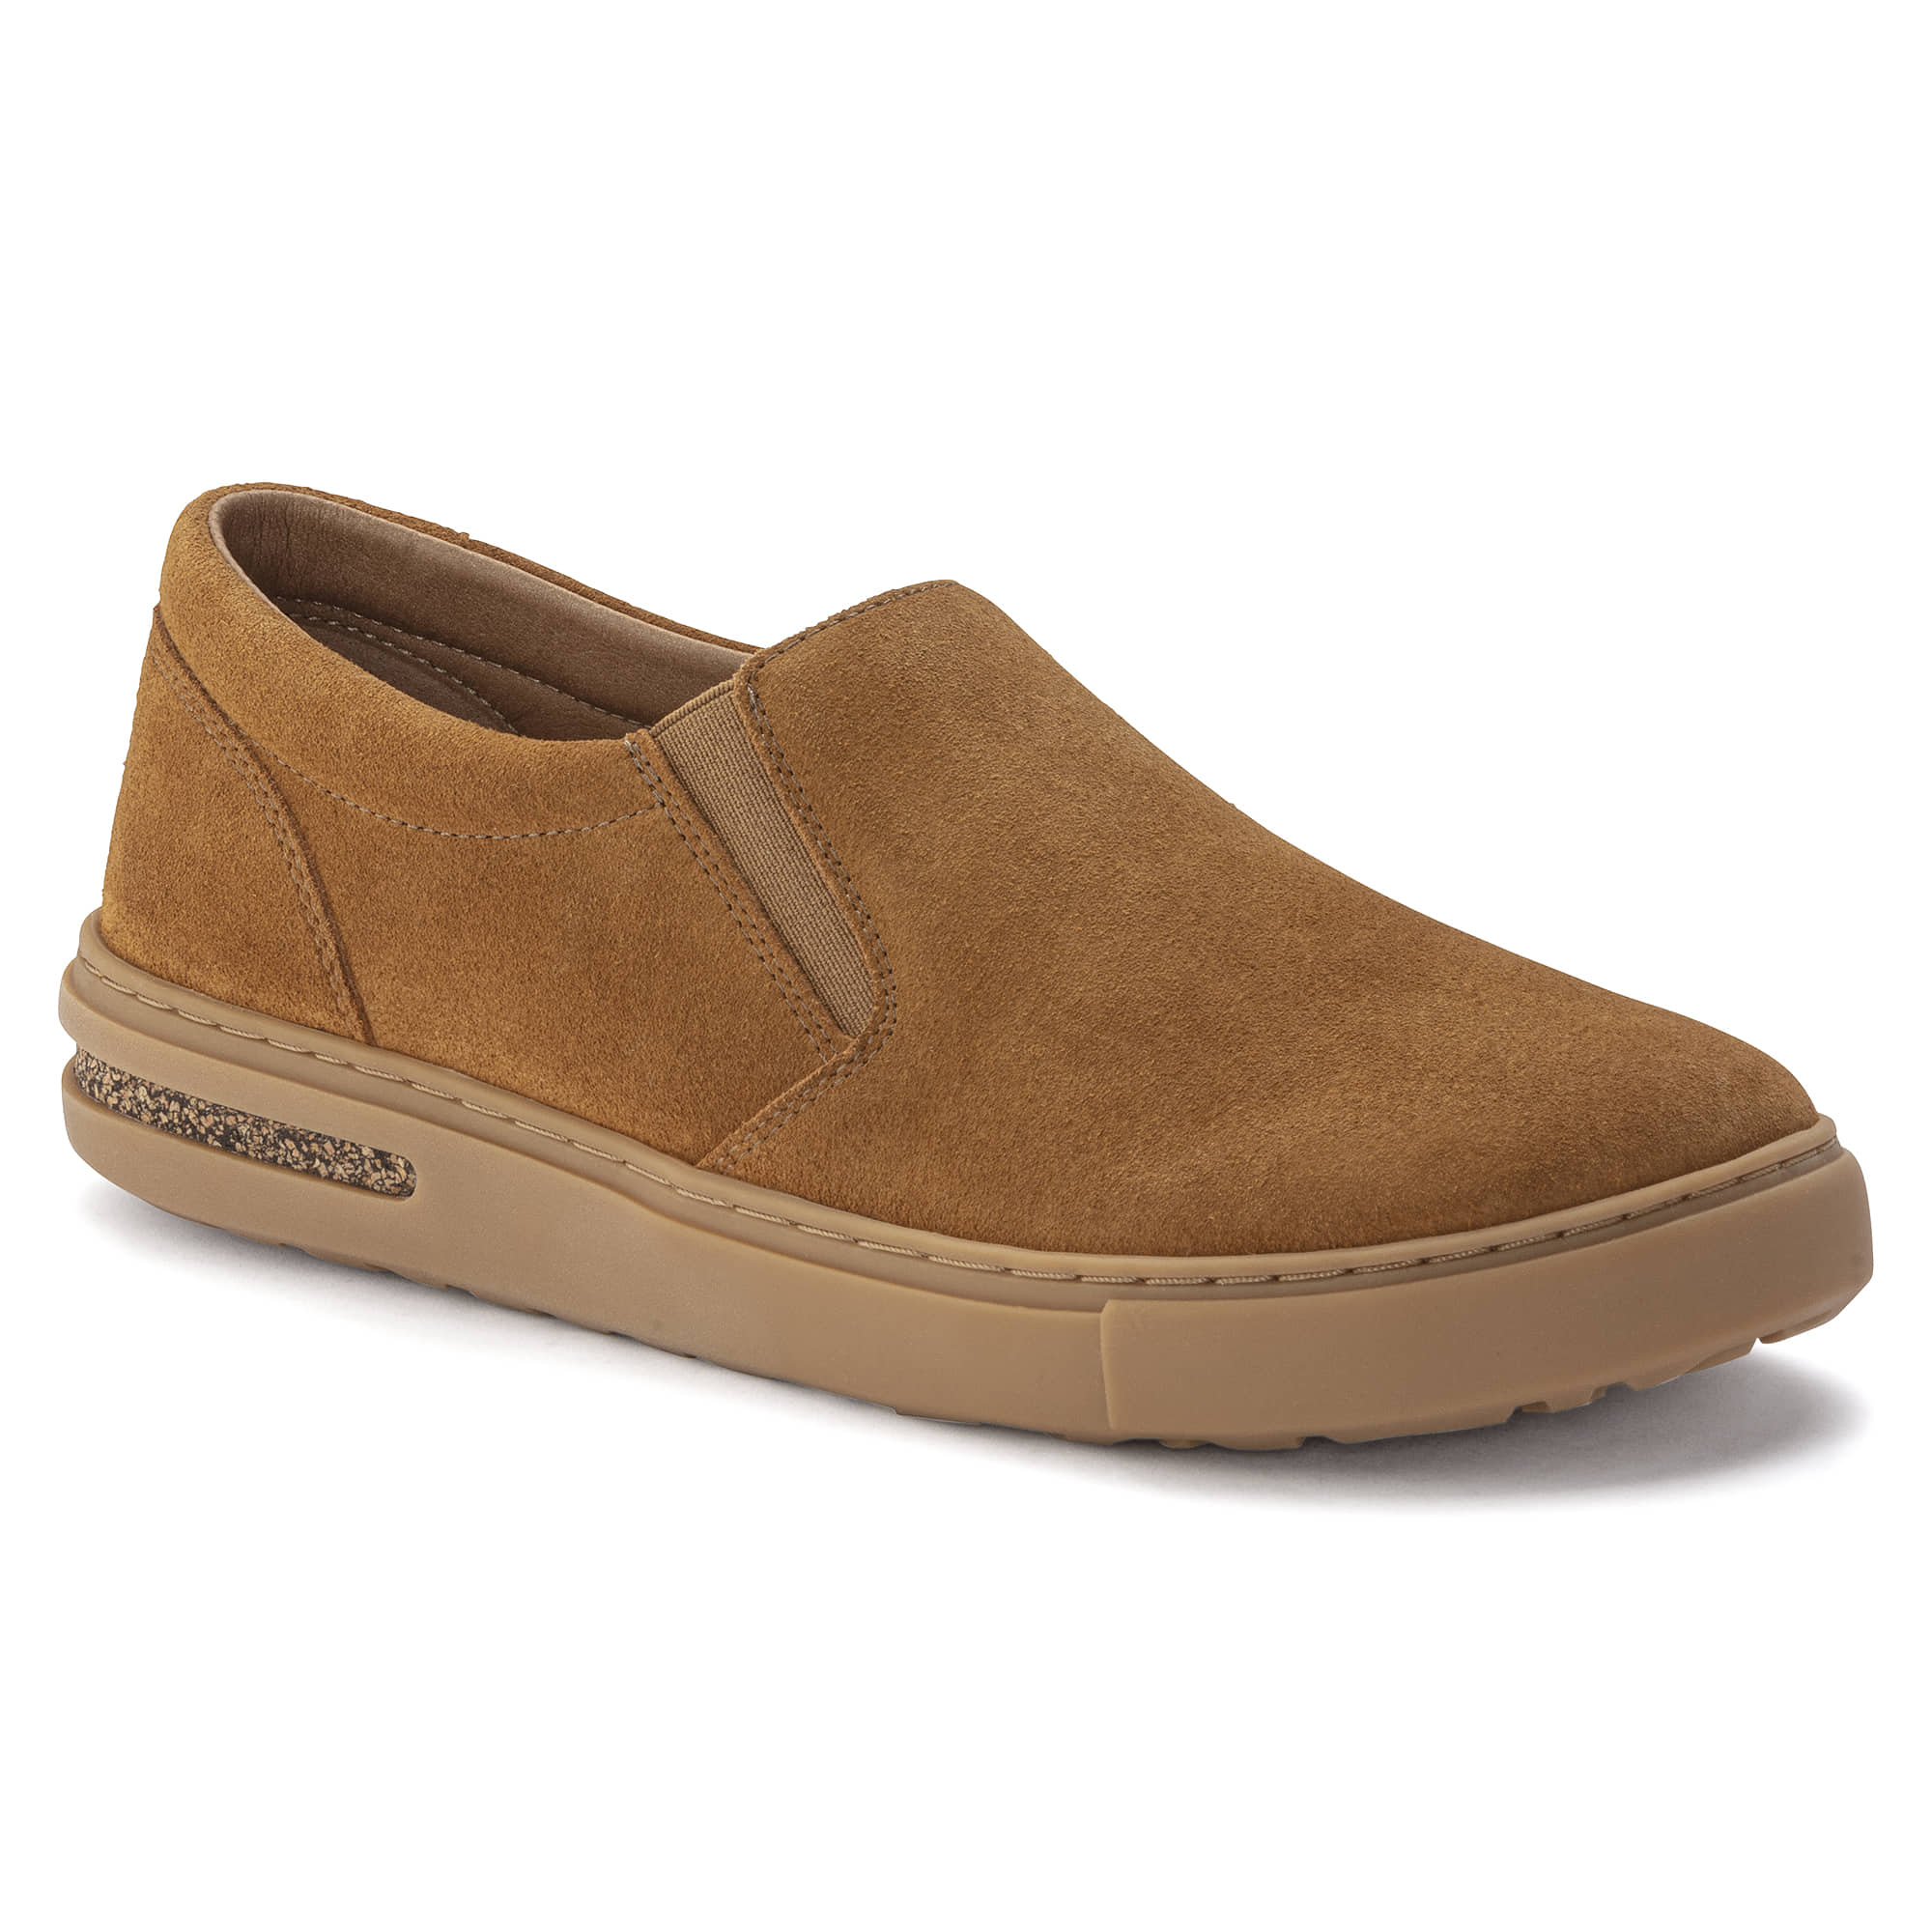 Shop Mens' Slip On Shoes, Sandals & Apparel | Sanuk®